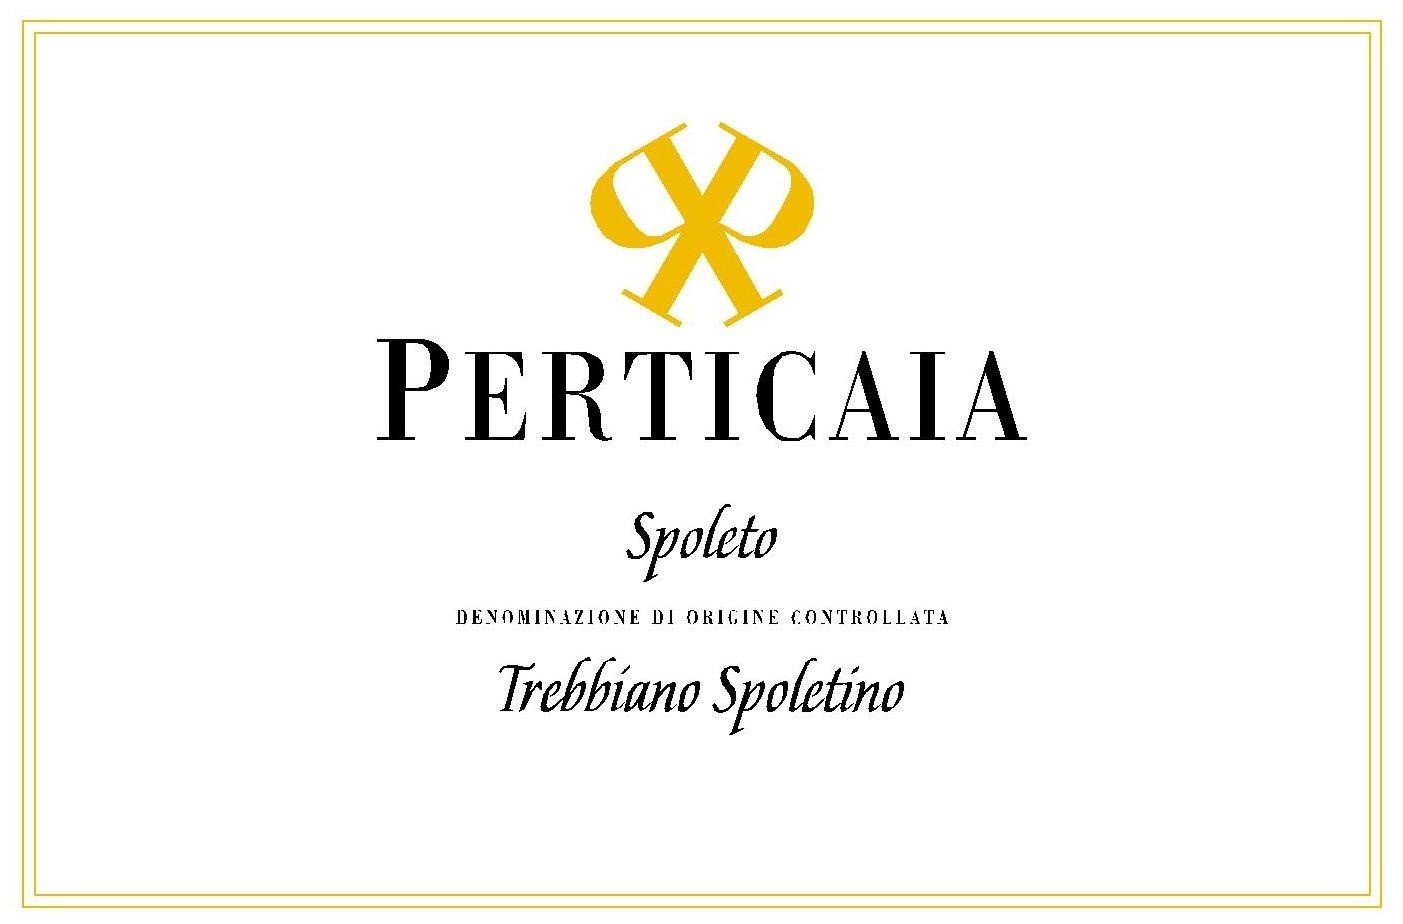 Perticaia, Trebbiano Spoletino Spoleto, 2020